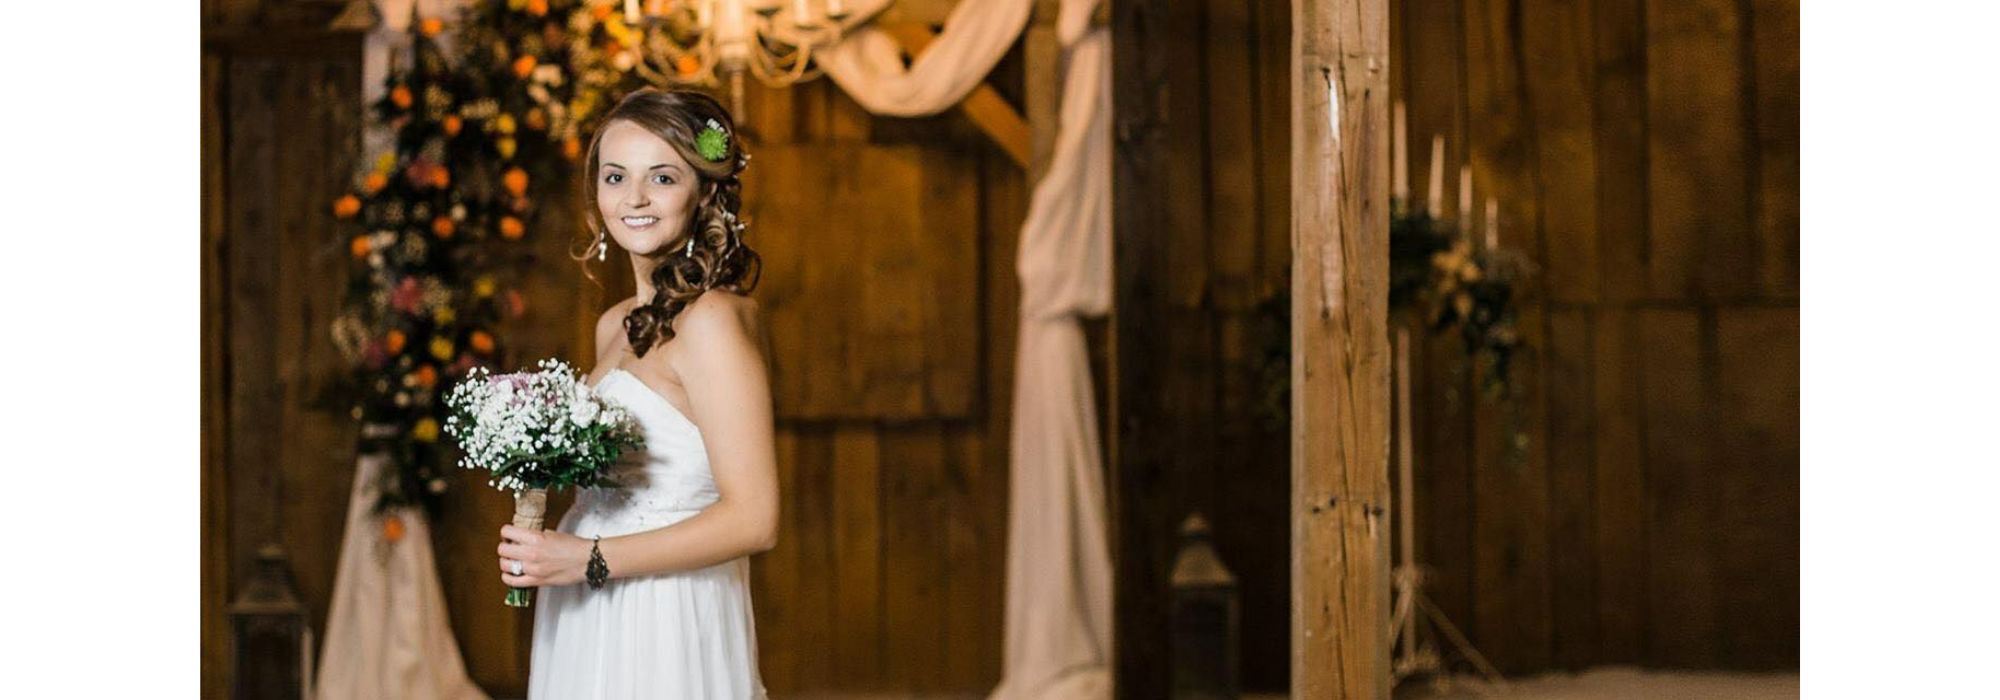 beautiful bride holding bouquet inside barn venue 